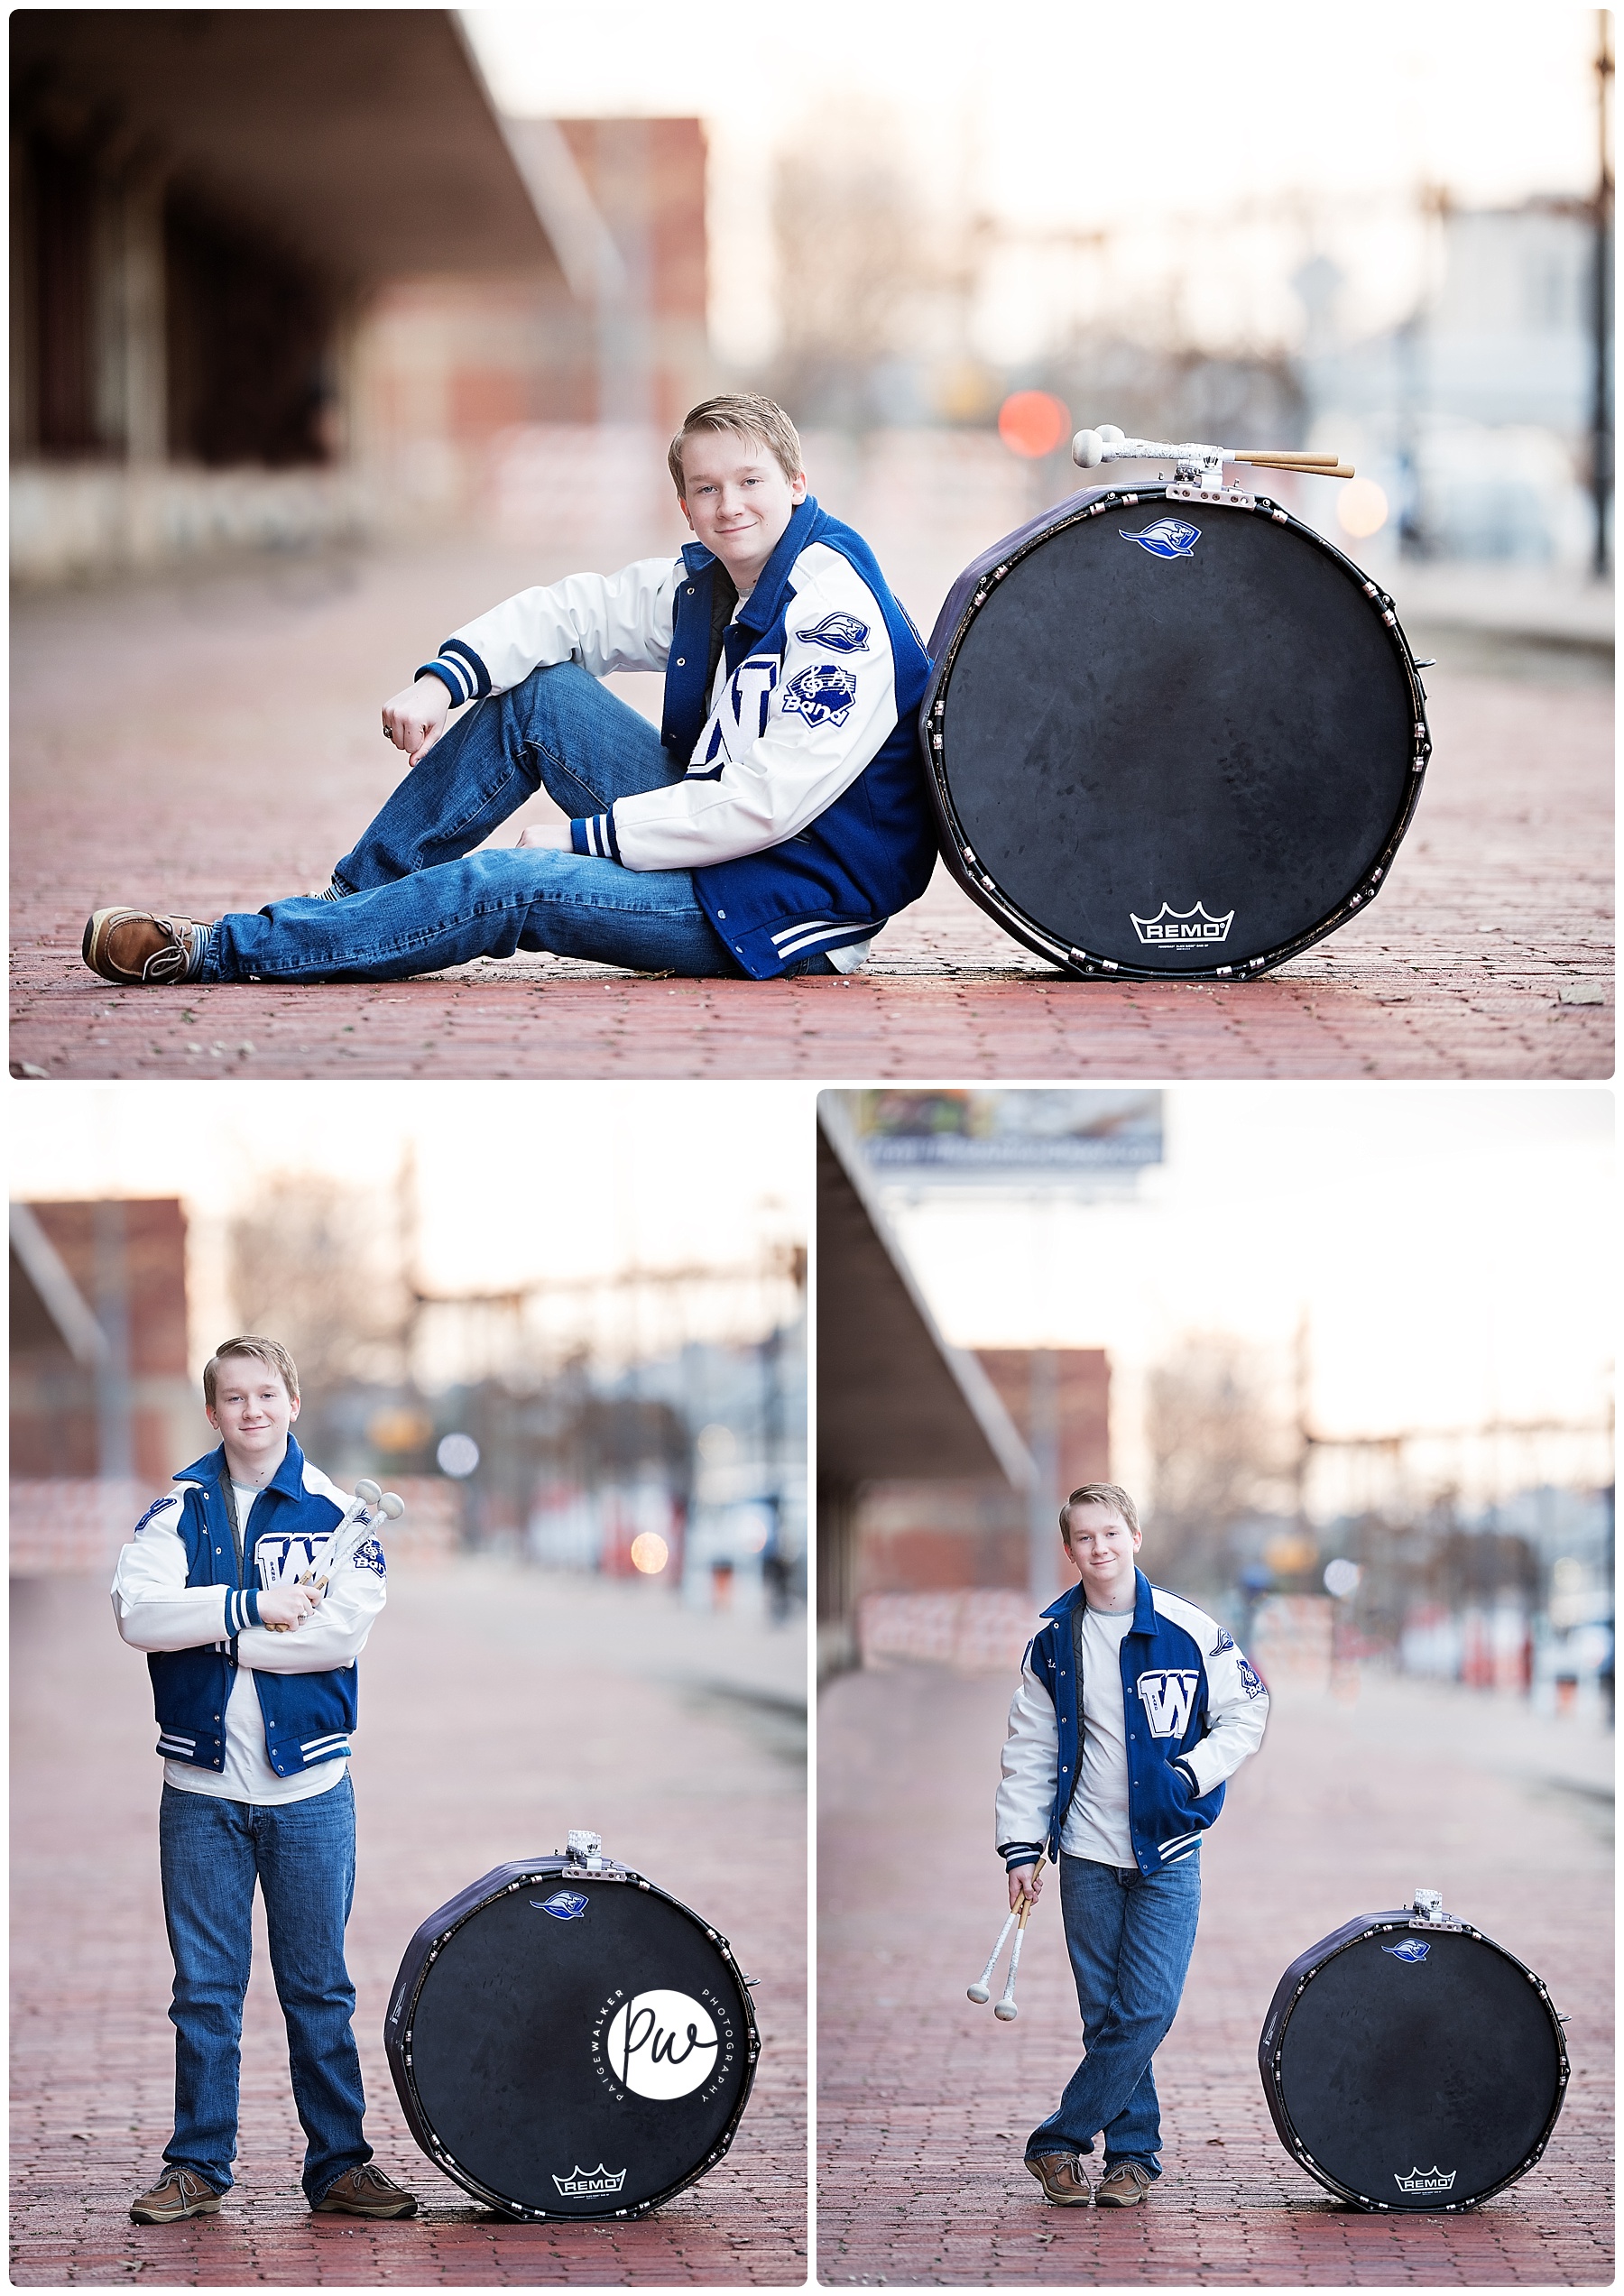 high school senior boy with his drum